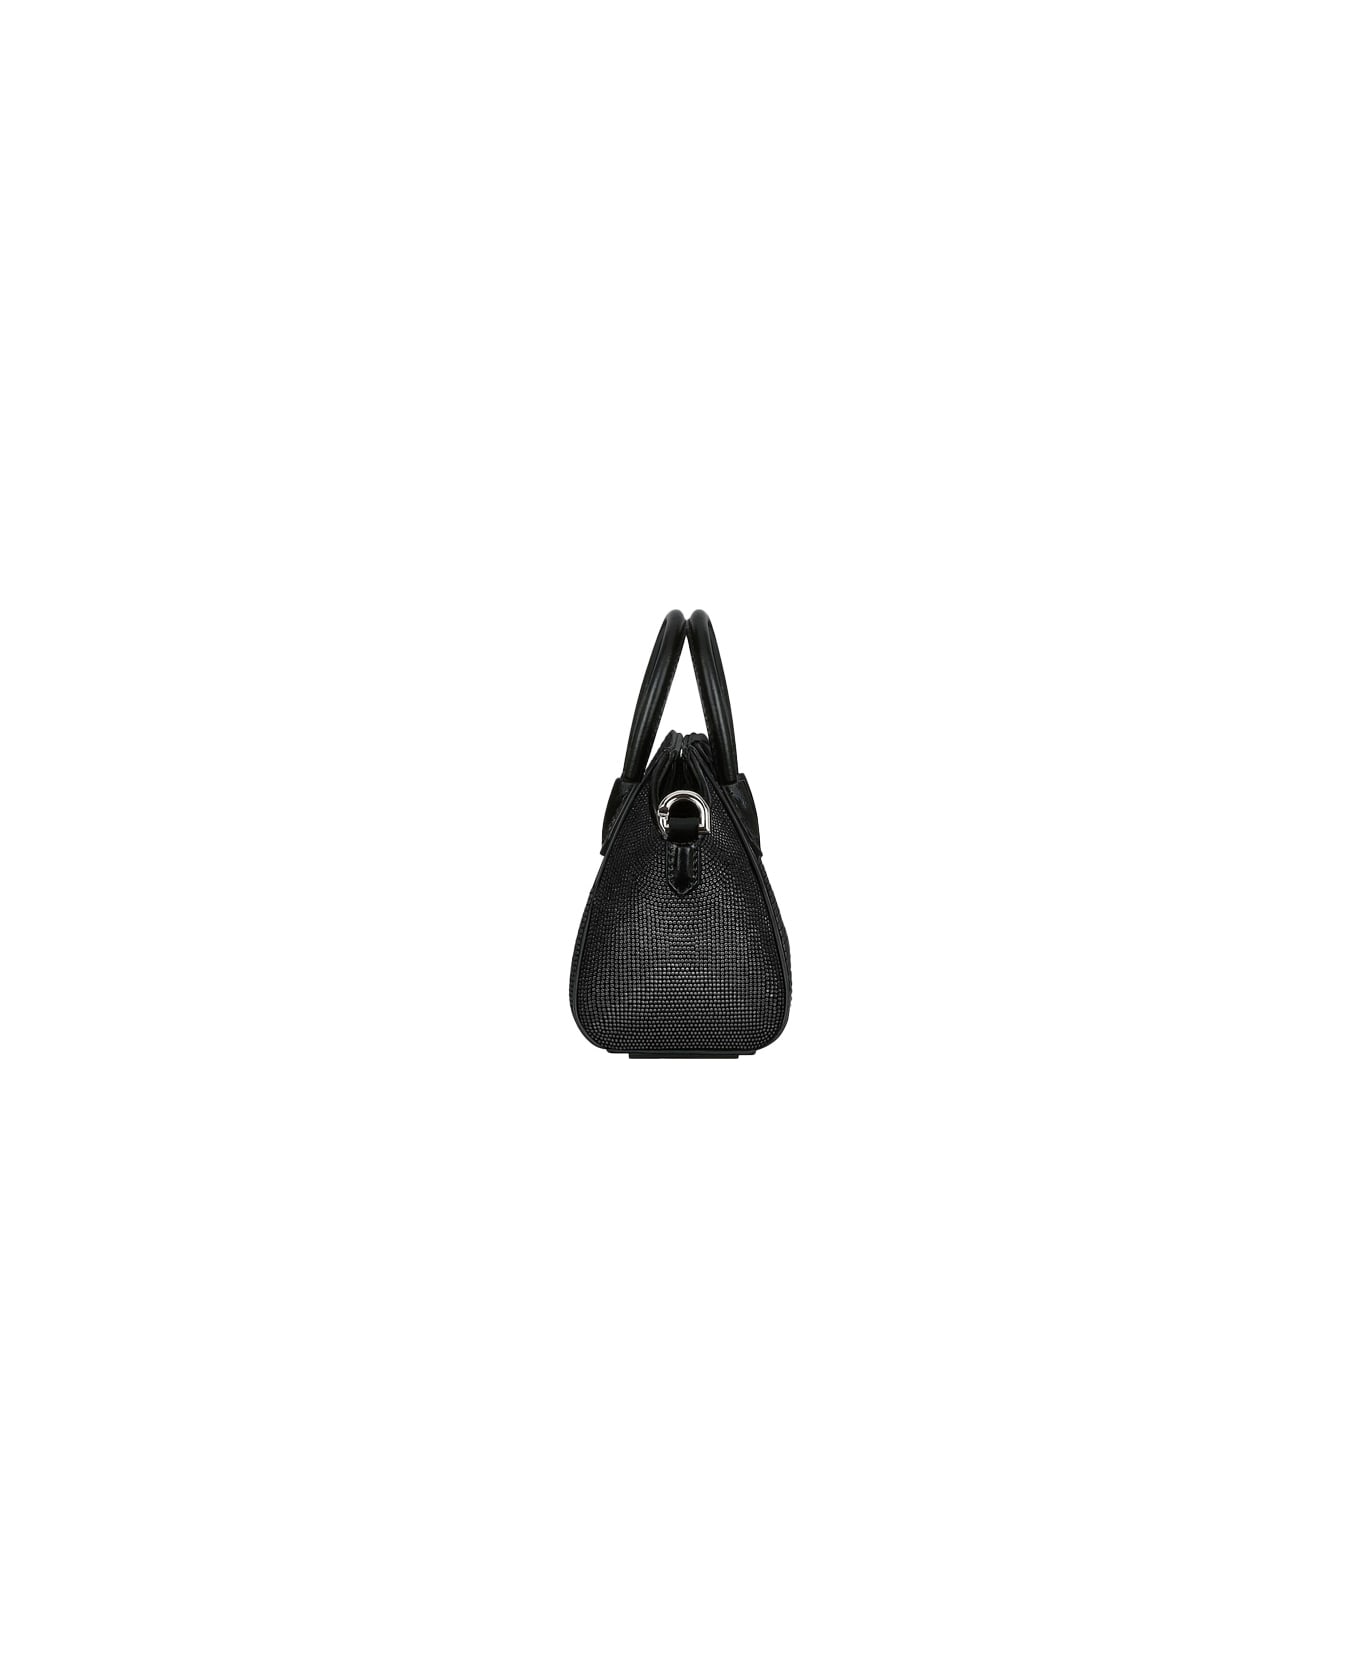 Givenchy Antigona Micro Bag In Black Satin With Rhinestones - Black